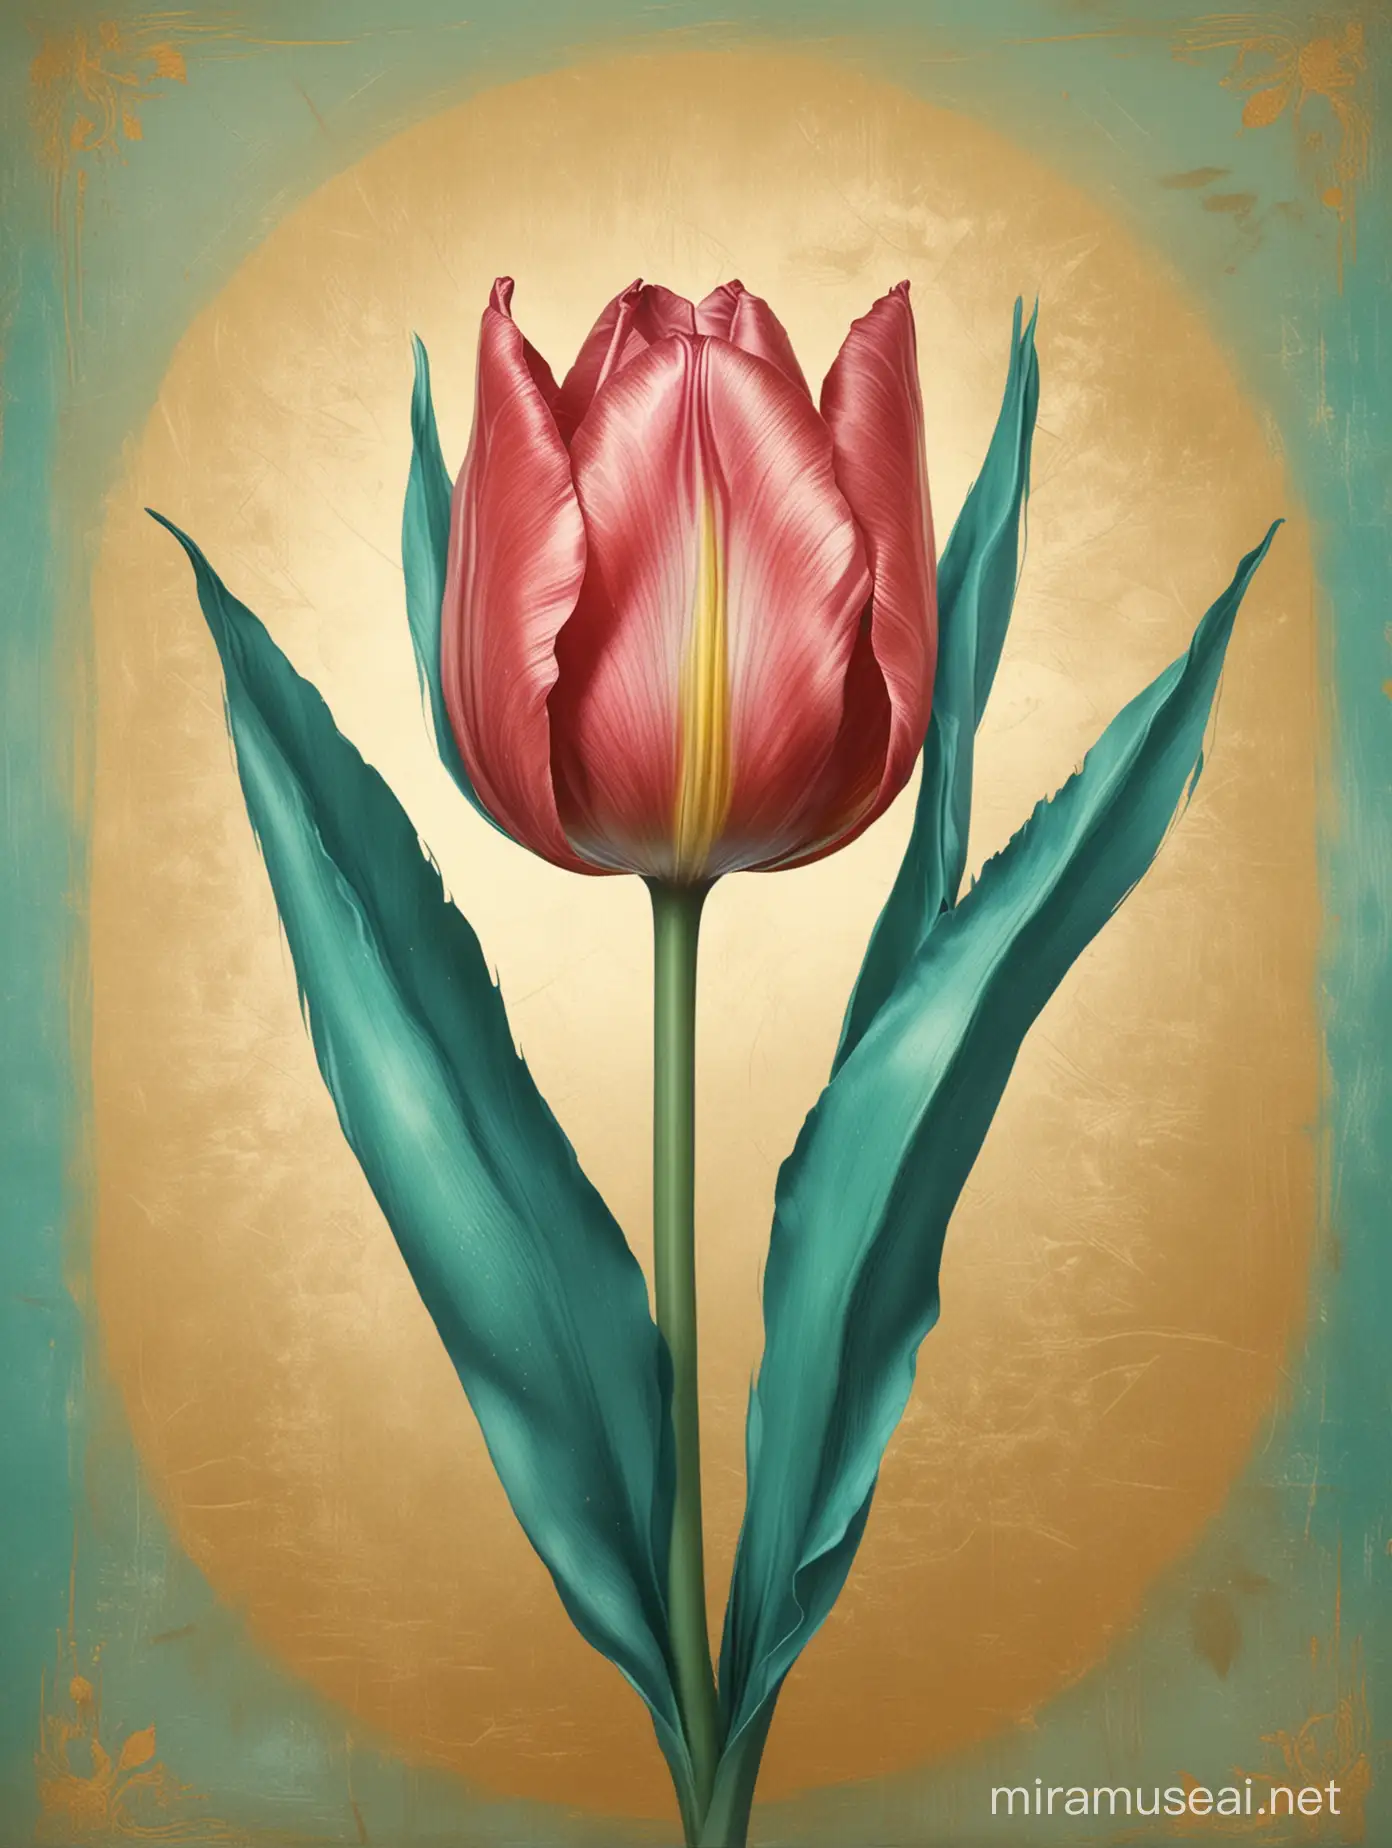 Turquoise Tulip illustration on golden background